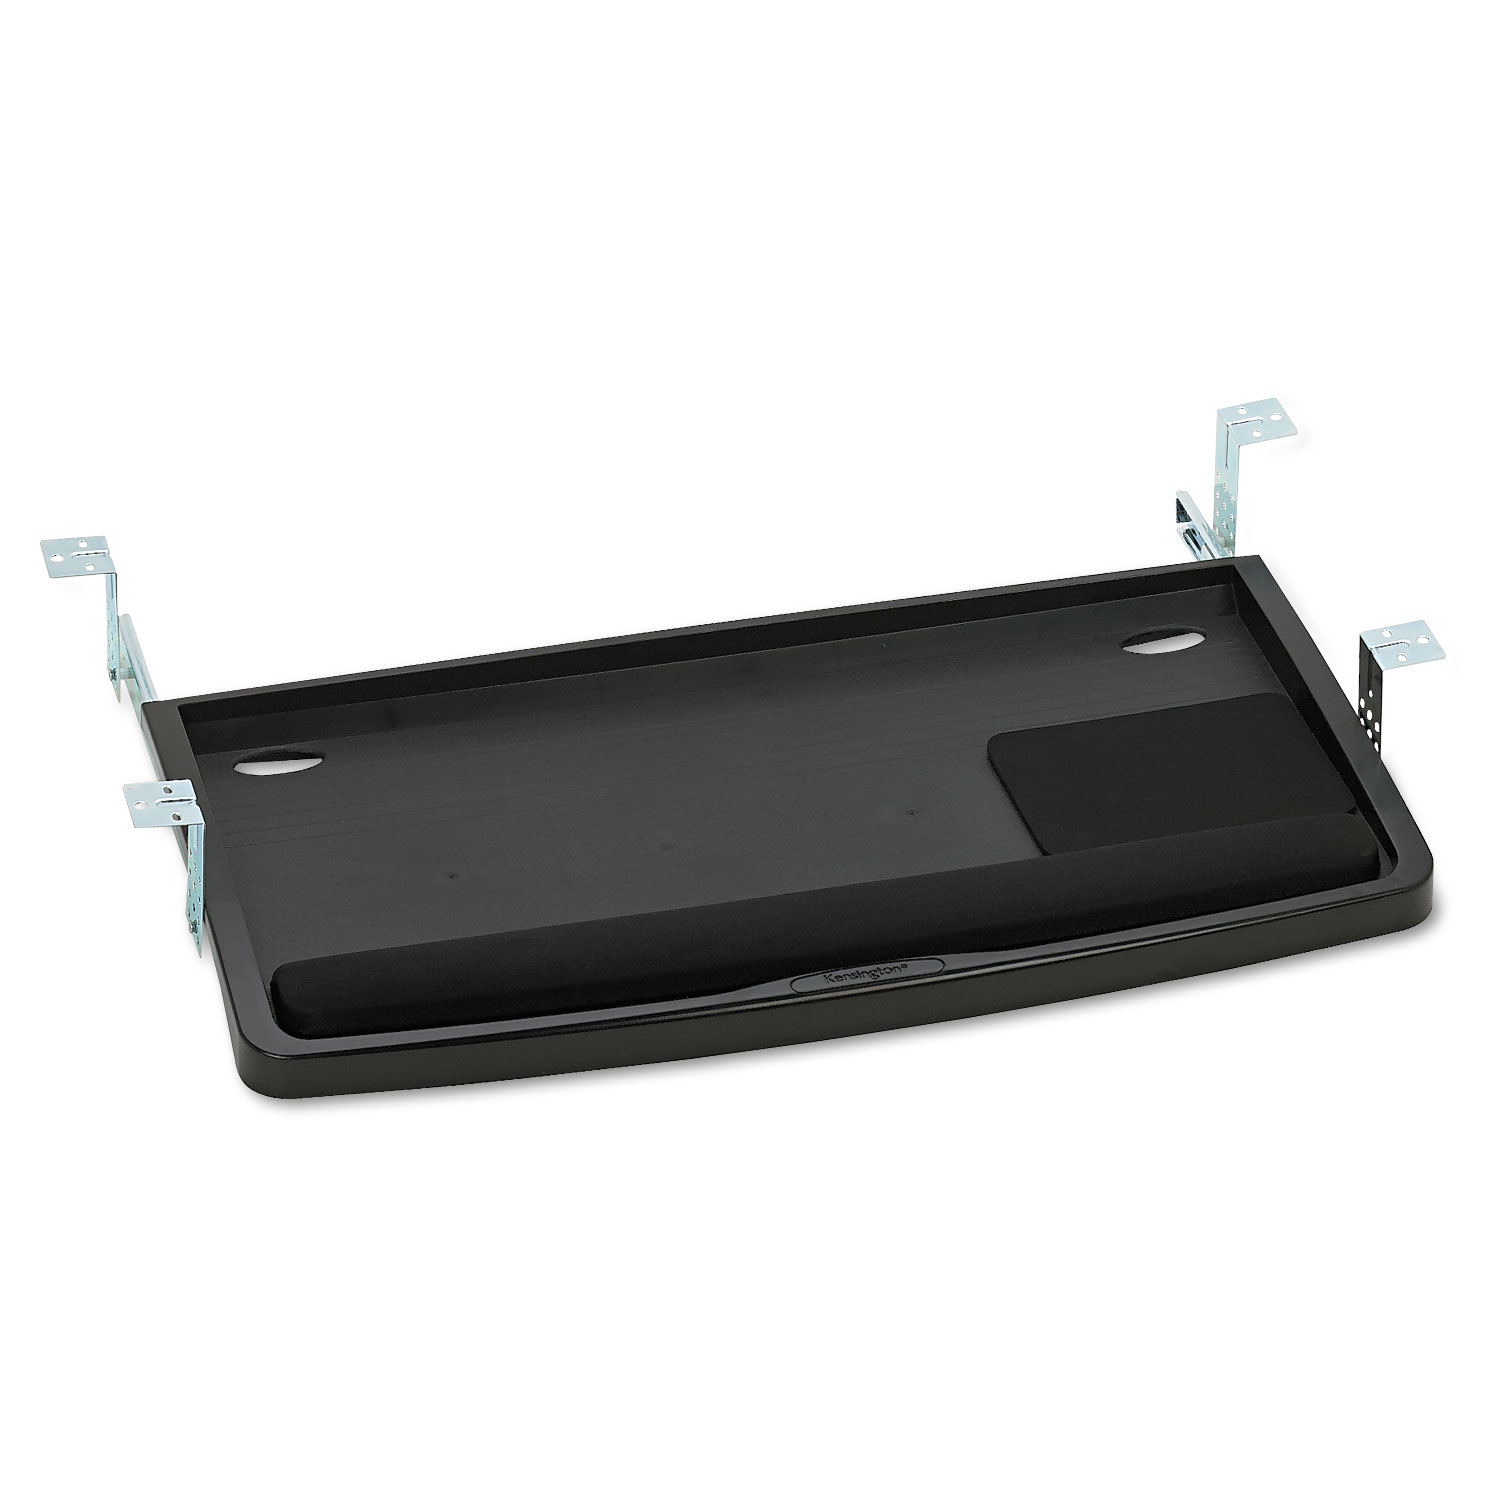 Comfort Keyboard Drawer with SmartFit System, 26w x 13-1/4d, Black